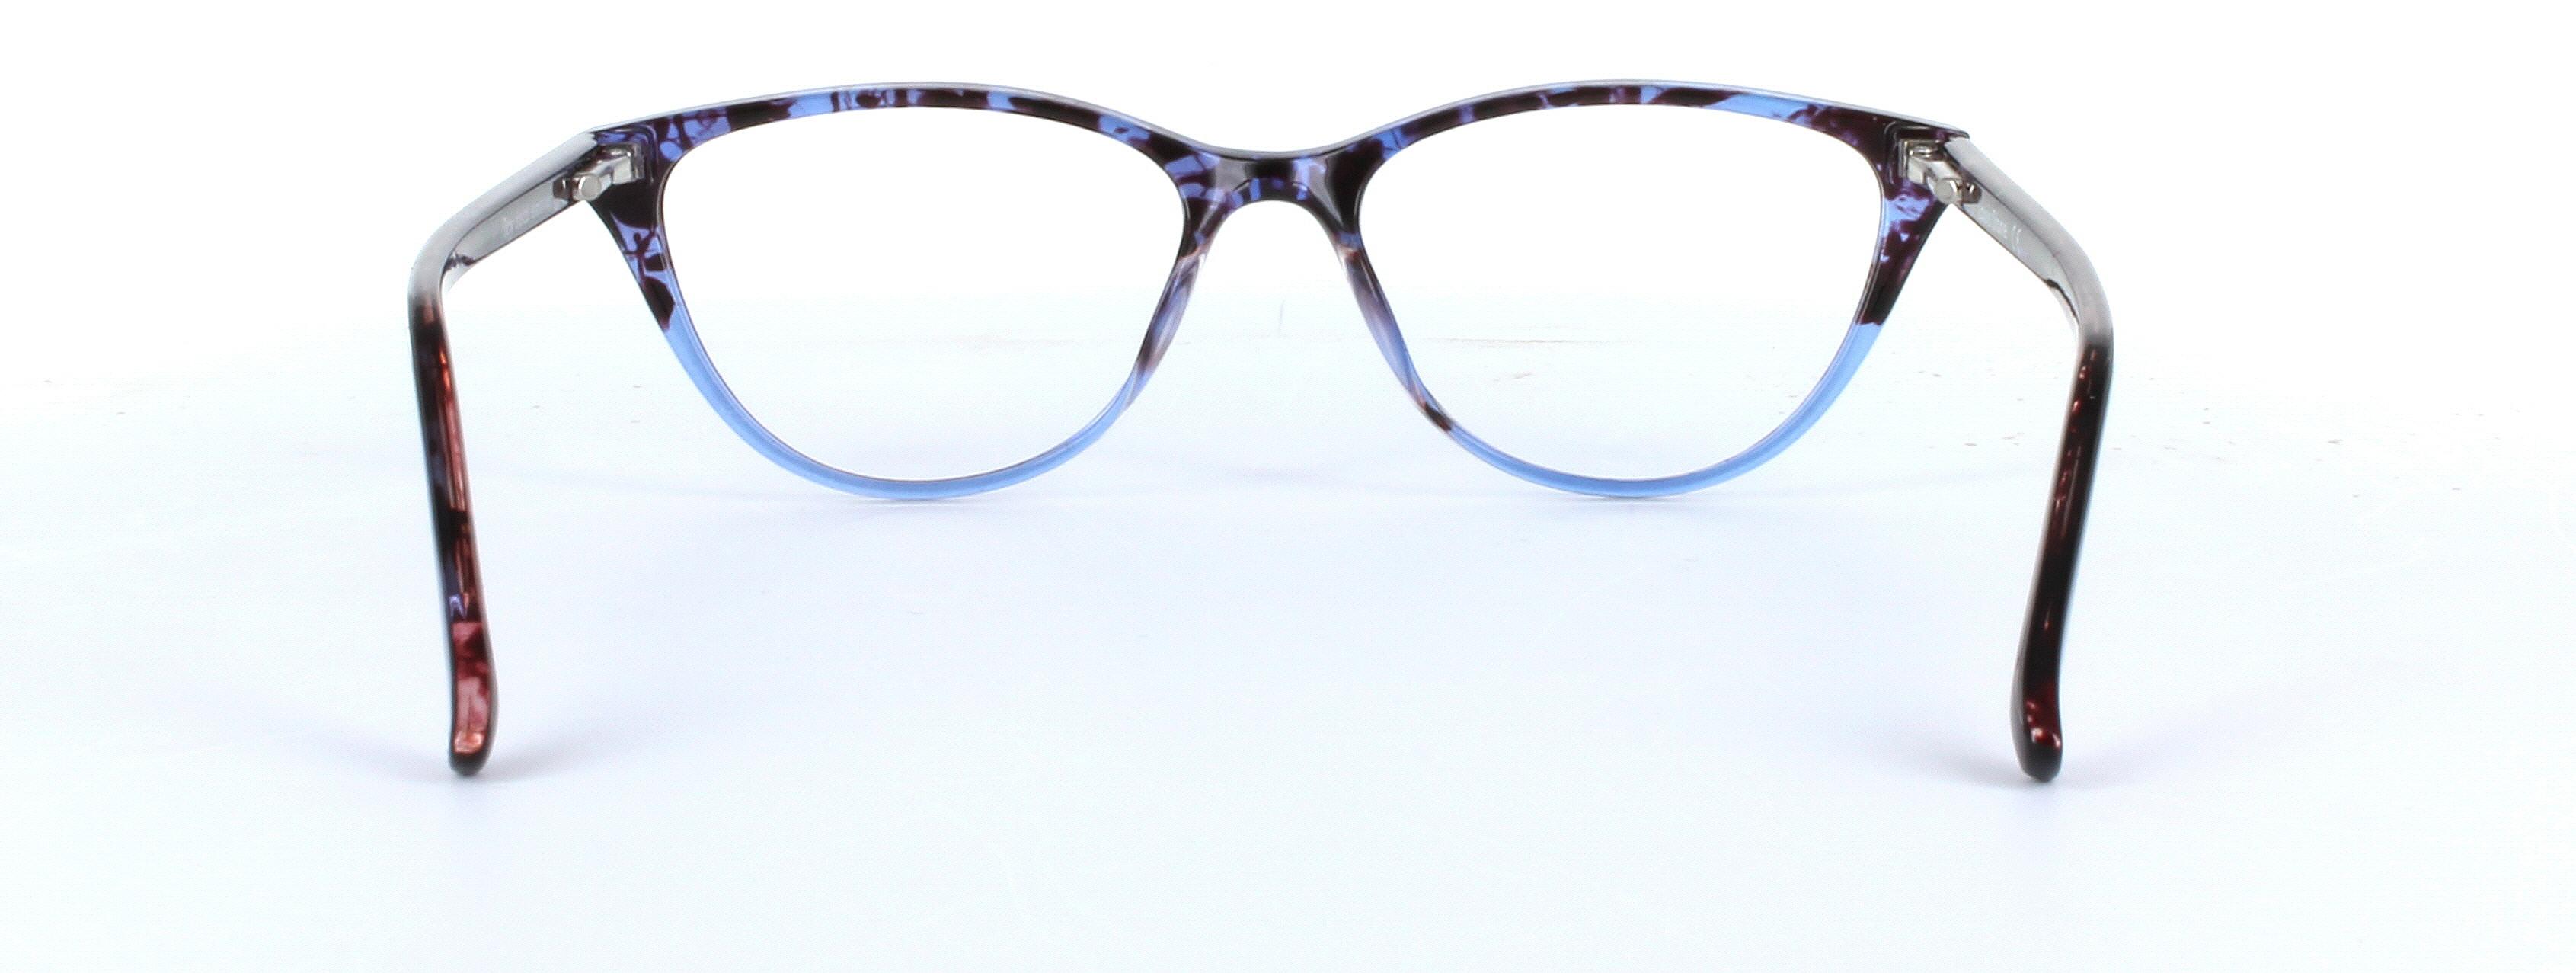 Copious Blue Full Rim Oval Round Plastic Glasses - Image View 3